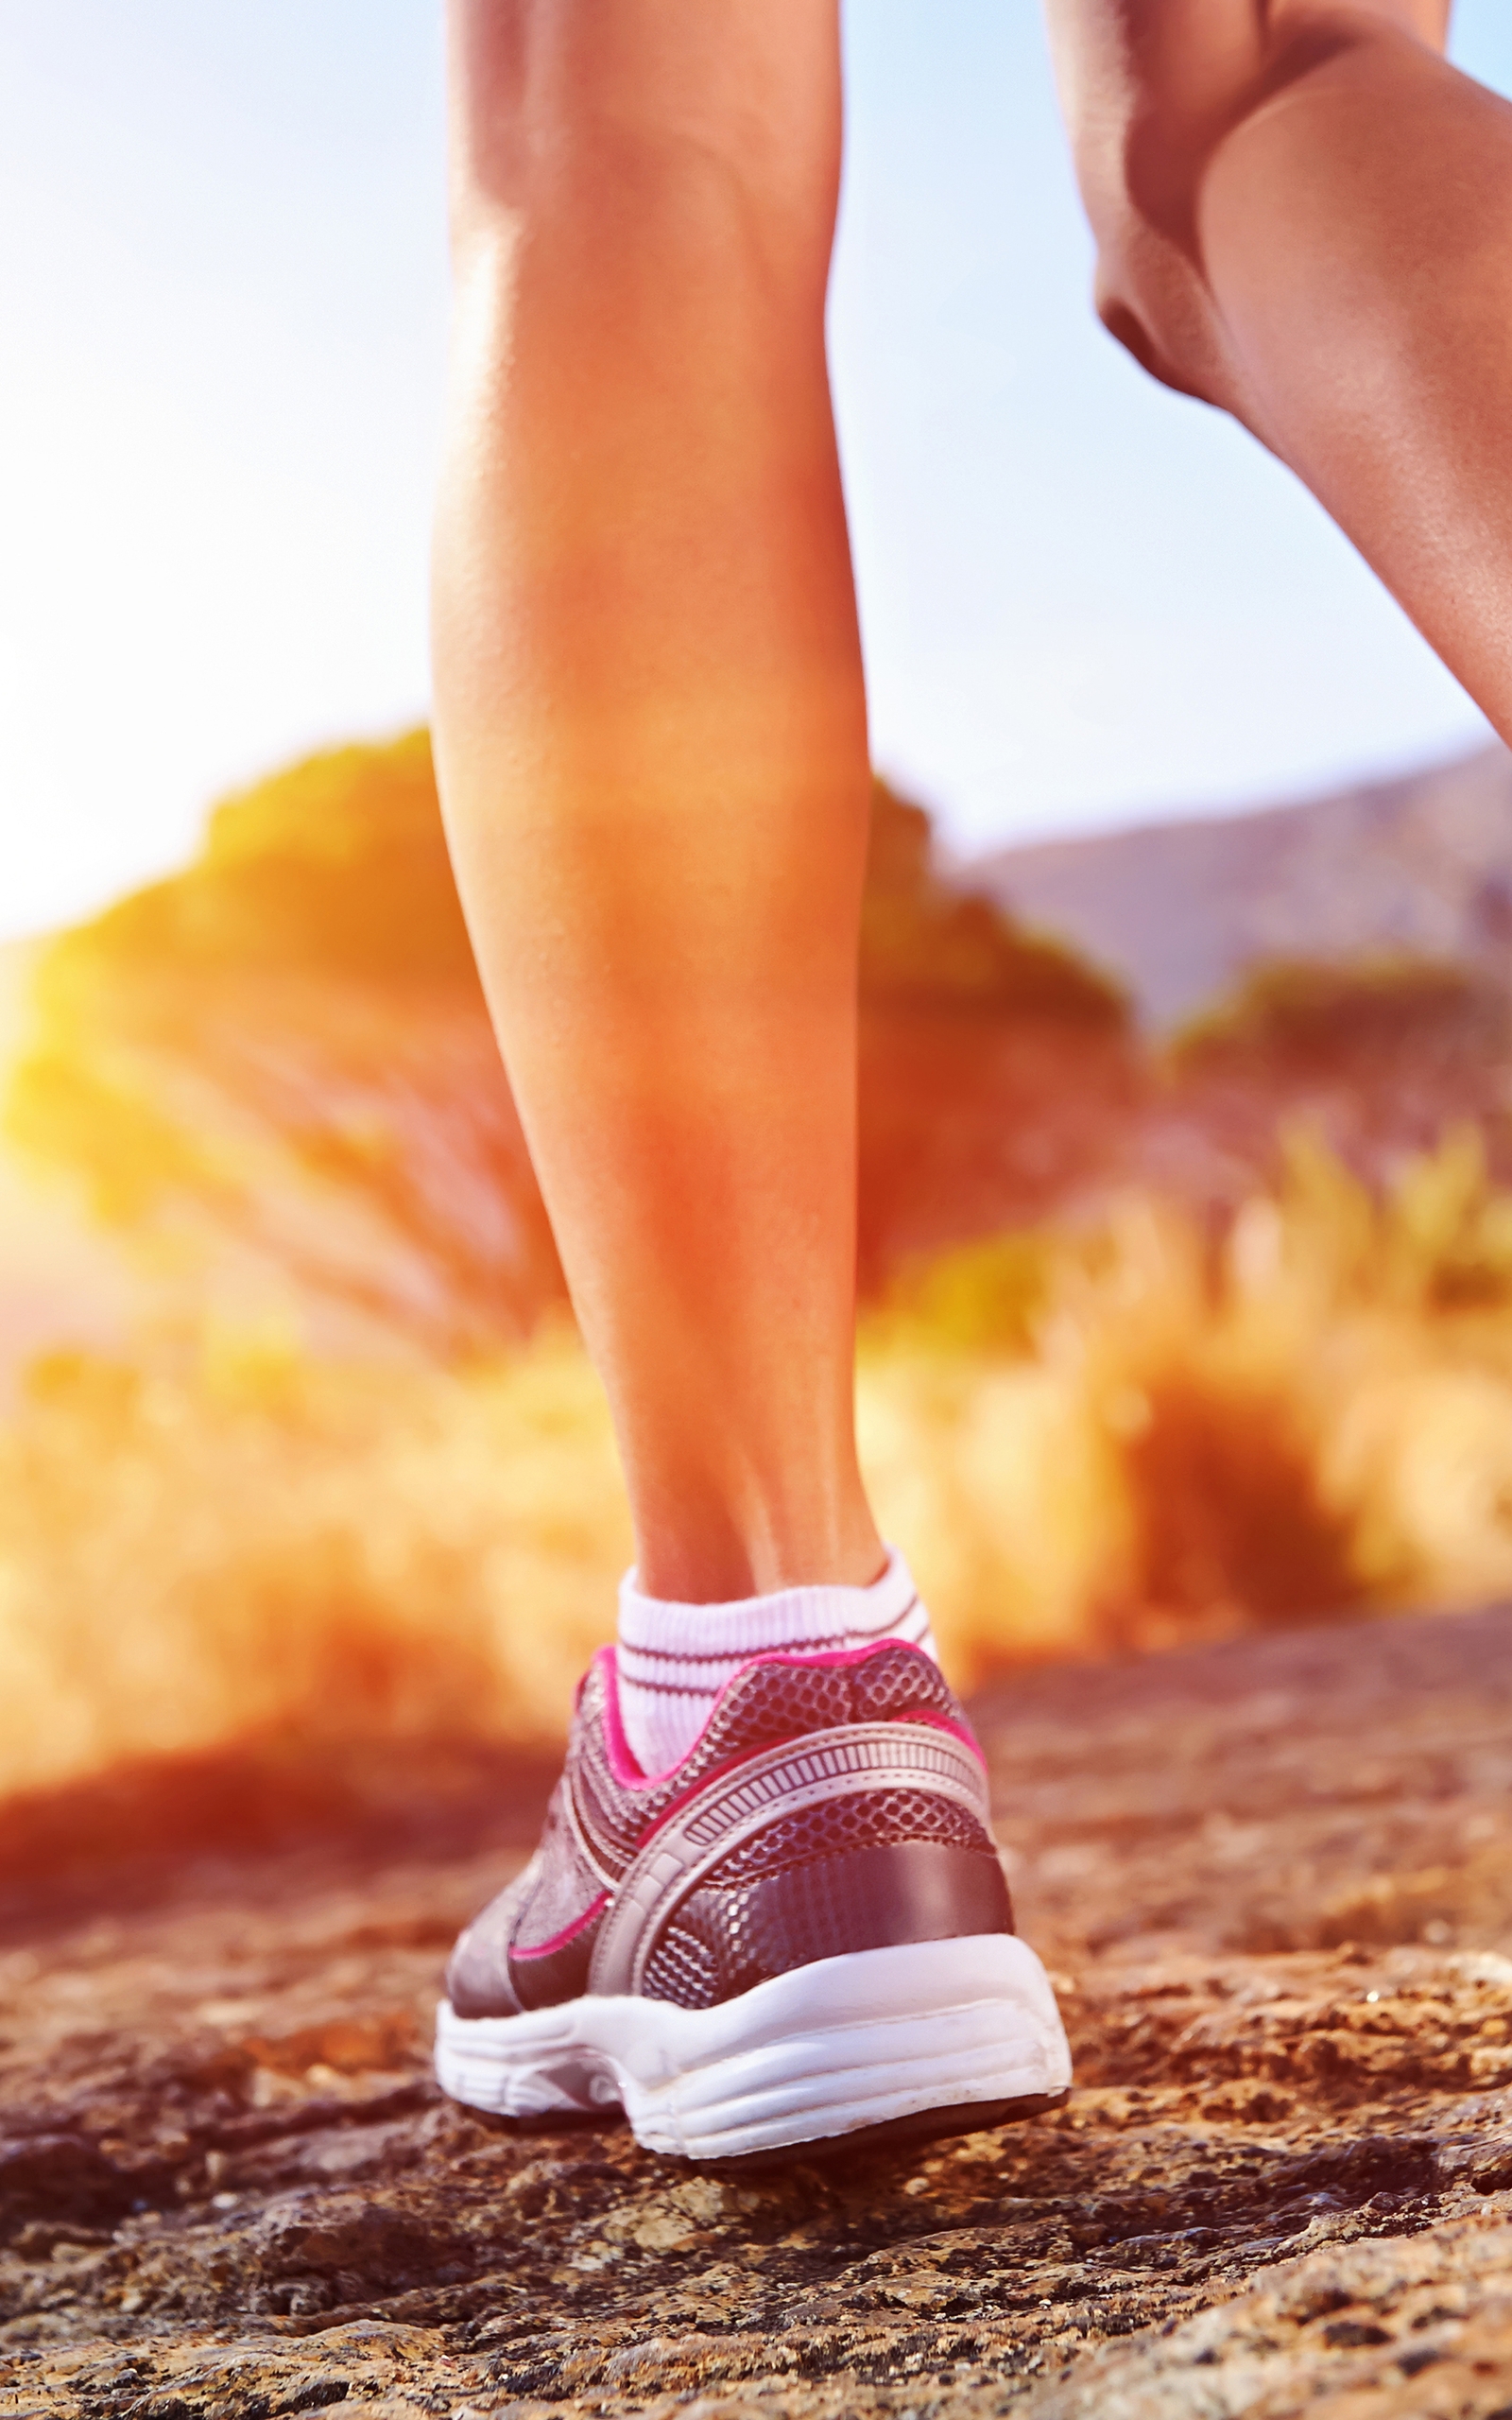 Image: Walking, running, athletic, legs, shoes, road